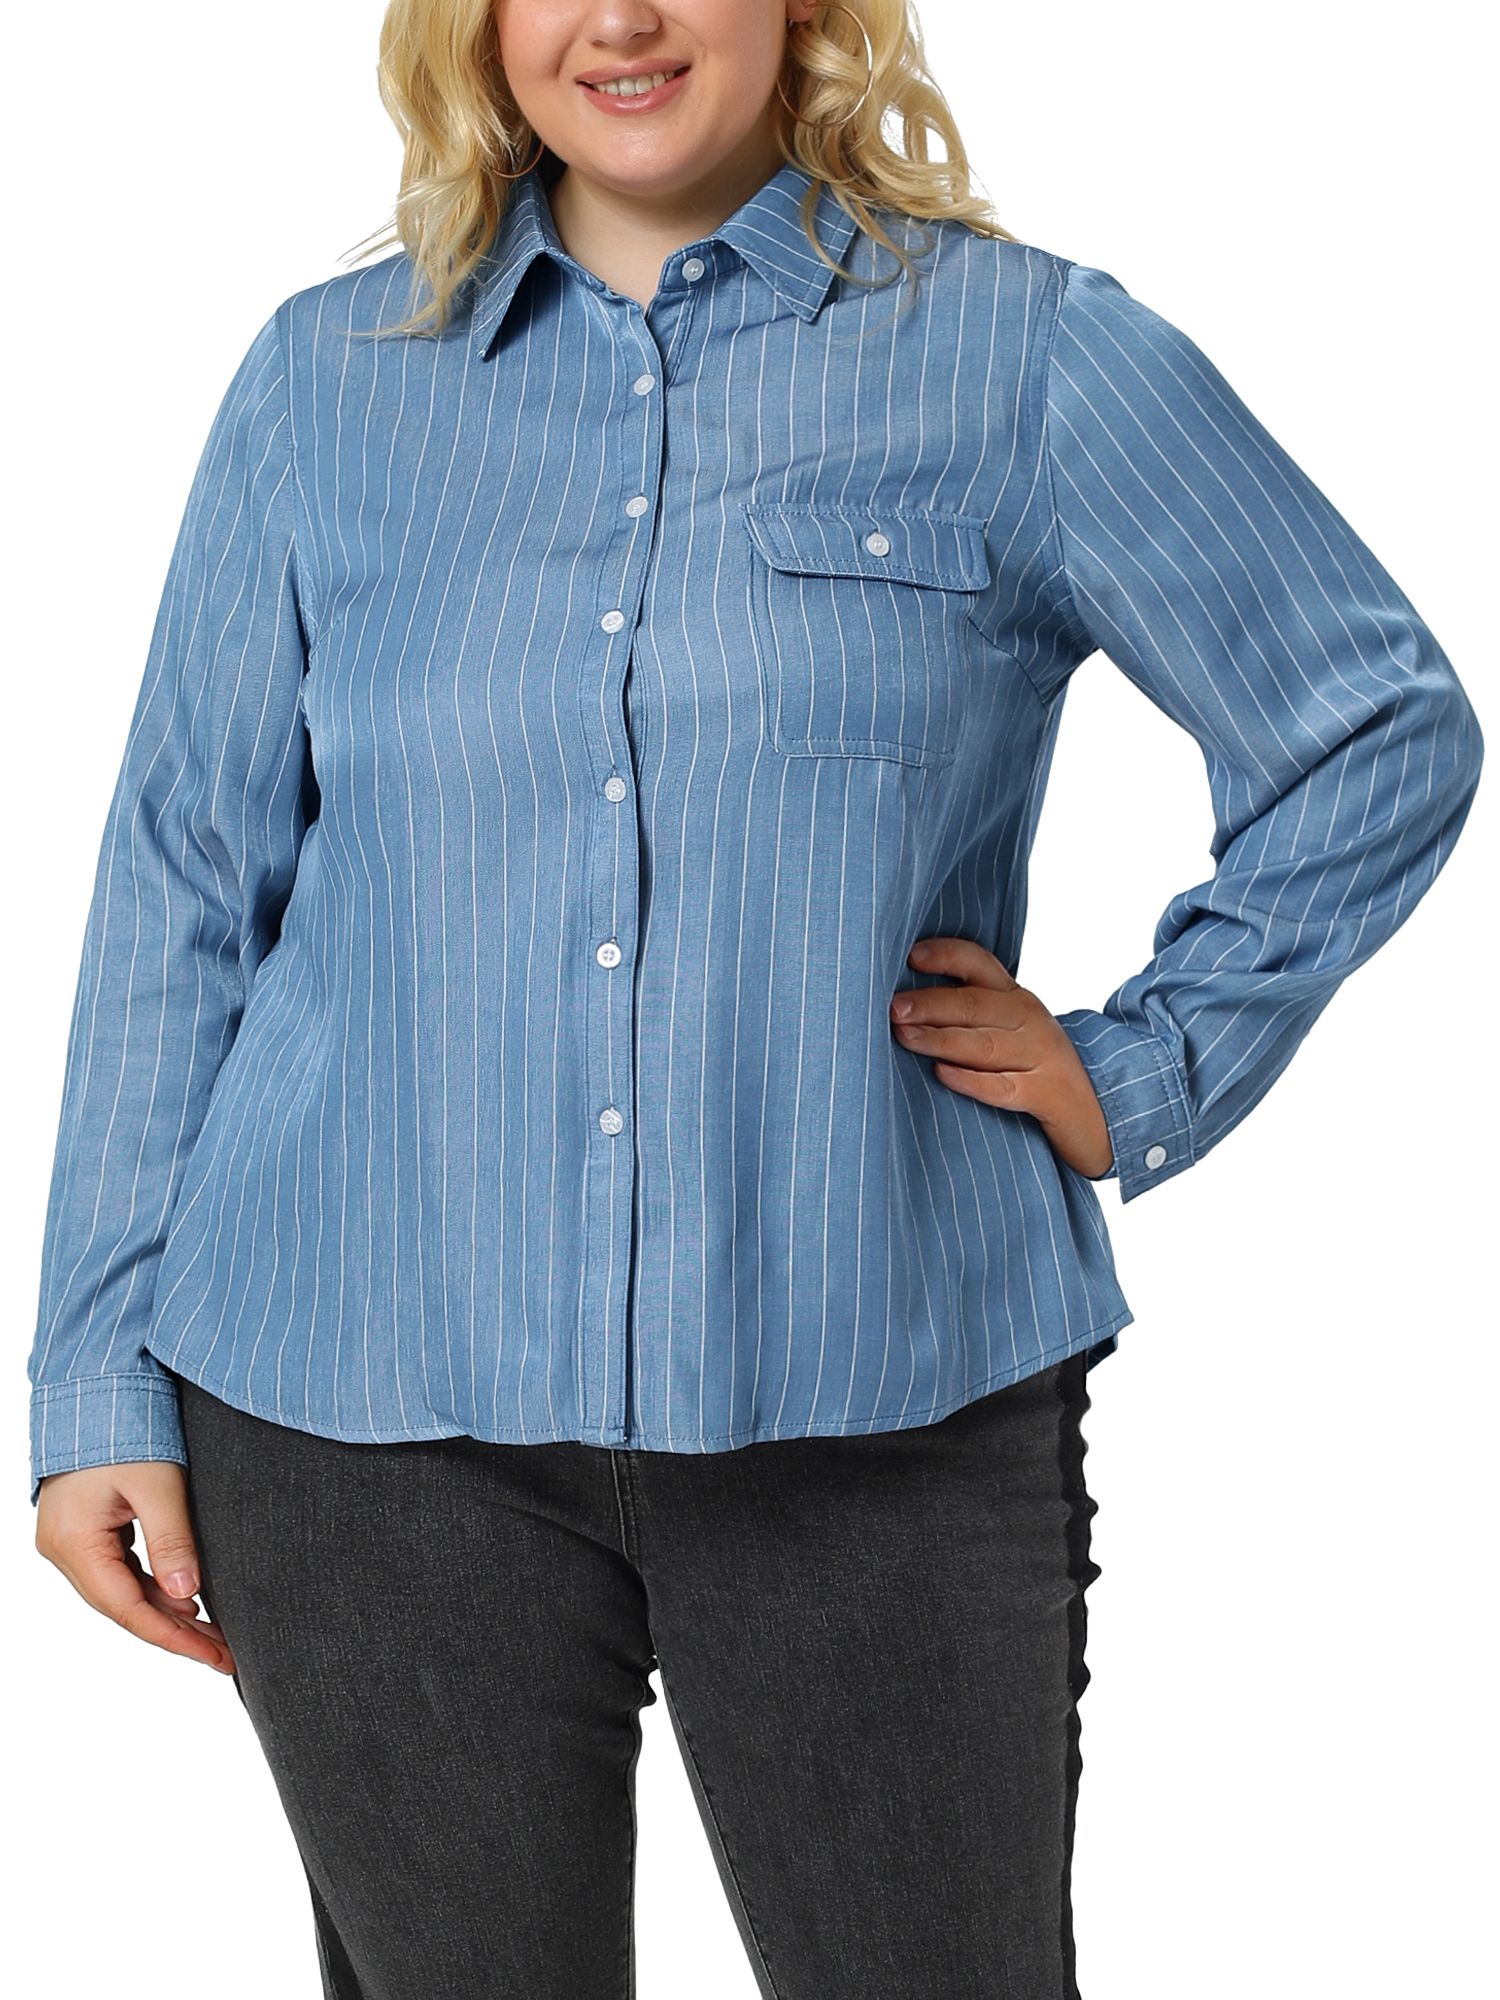 Women's Denim Shirt Long Sleeve Casual Button Down Chambray Shirt 2023  Distressed Jean Shirt Blouse Light Blue at Amazon Women's Clothing store